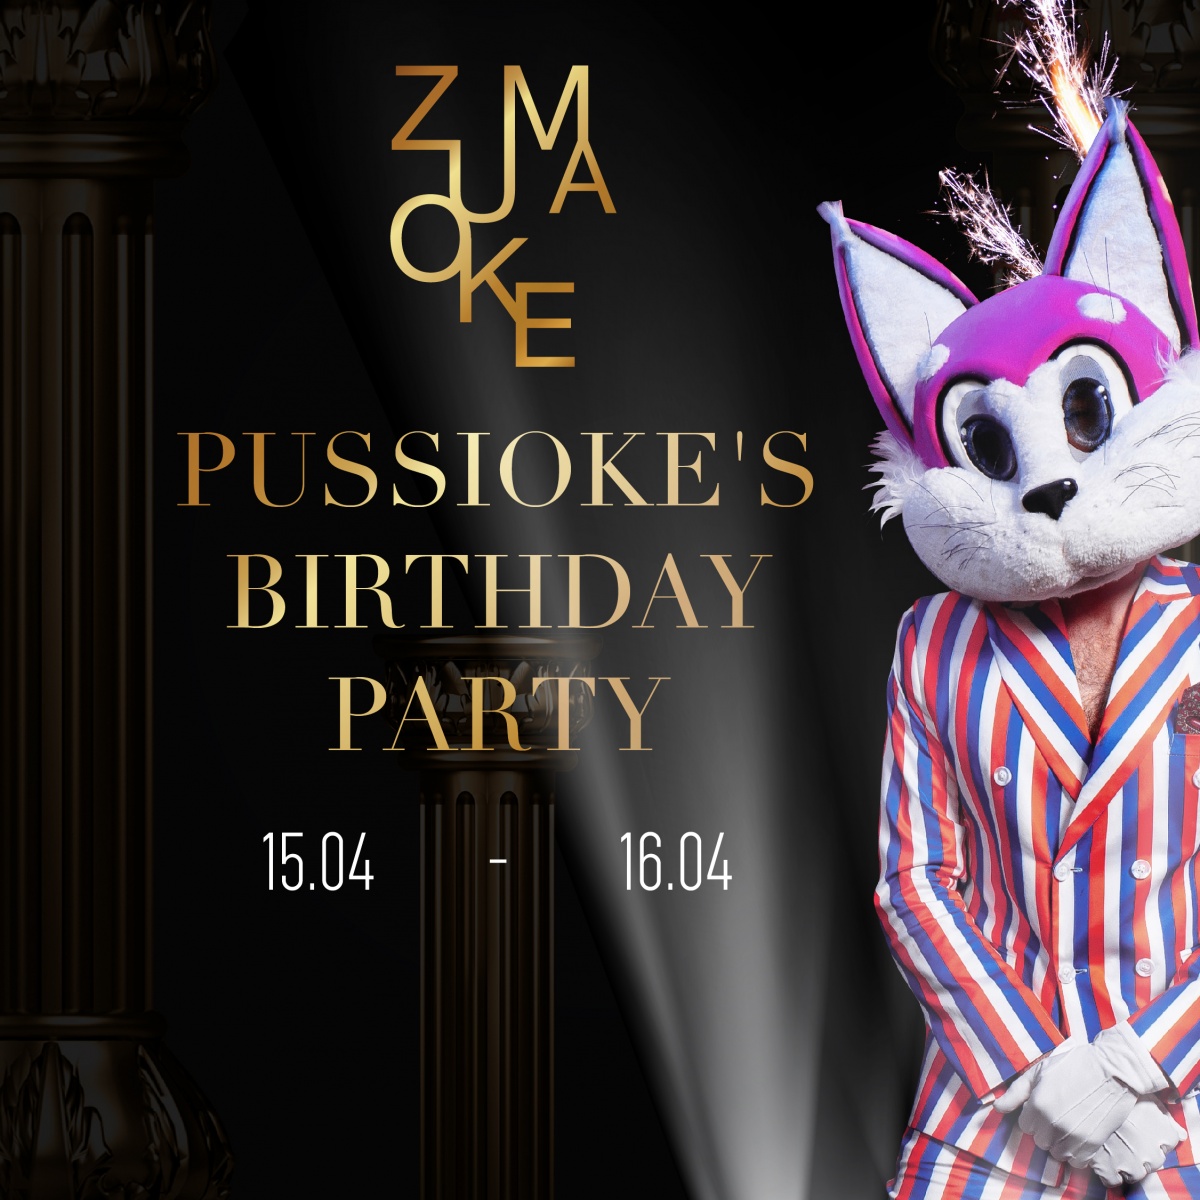 Pussiokes birthday party 15.04  16.04  ZUMAOKE